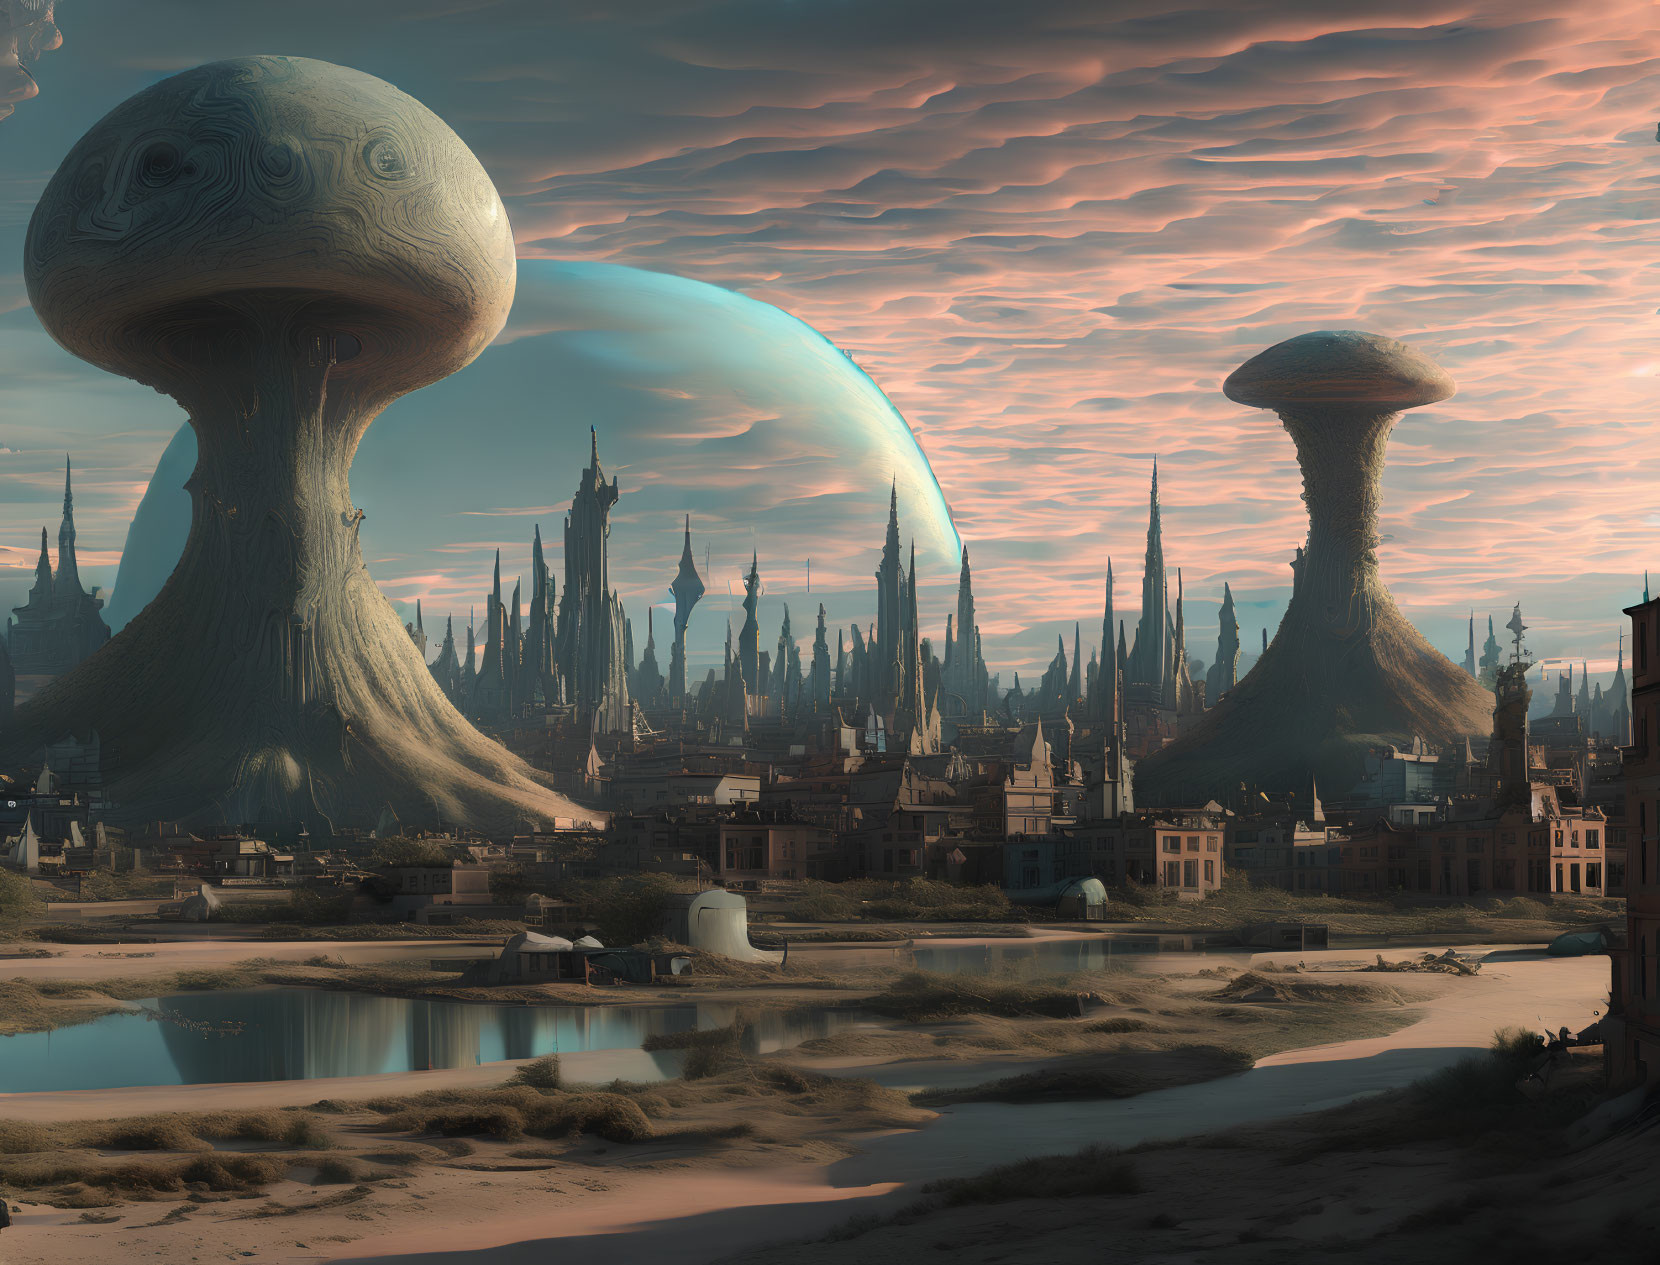 Futuristic cityscape with mushroom-like towers and pink sky.